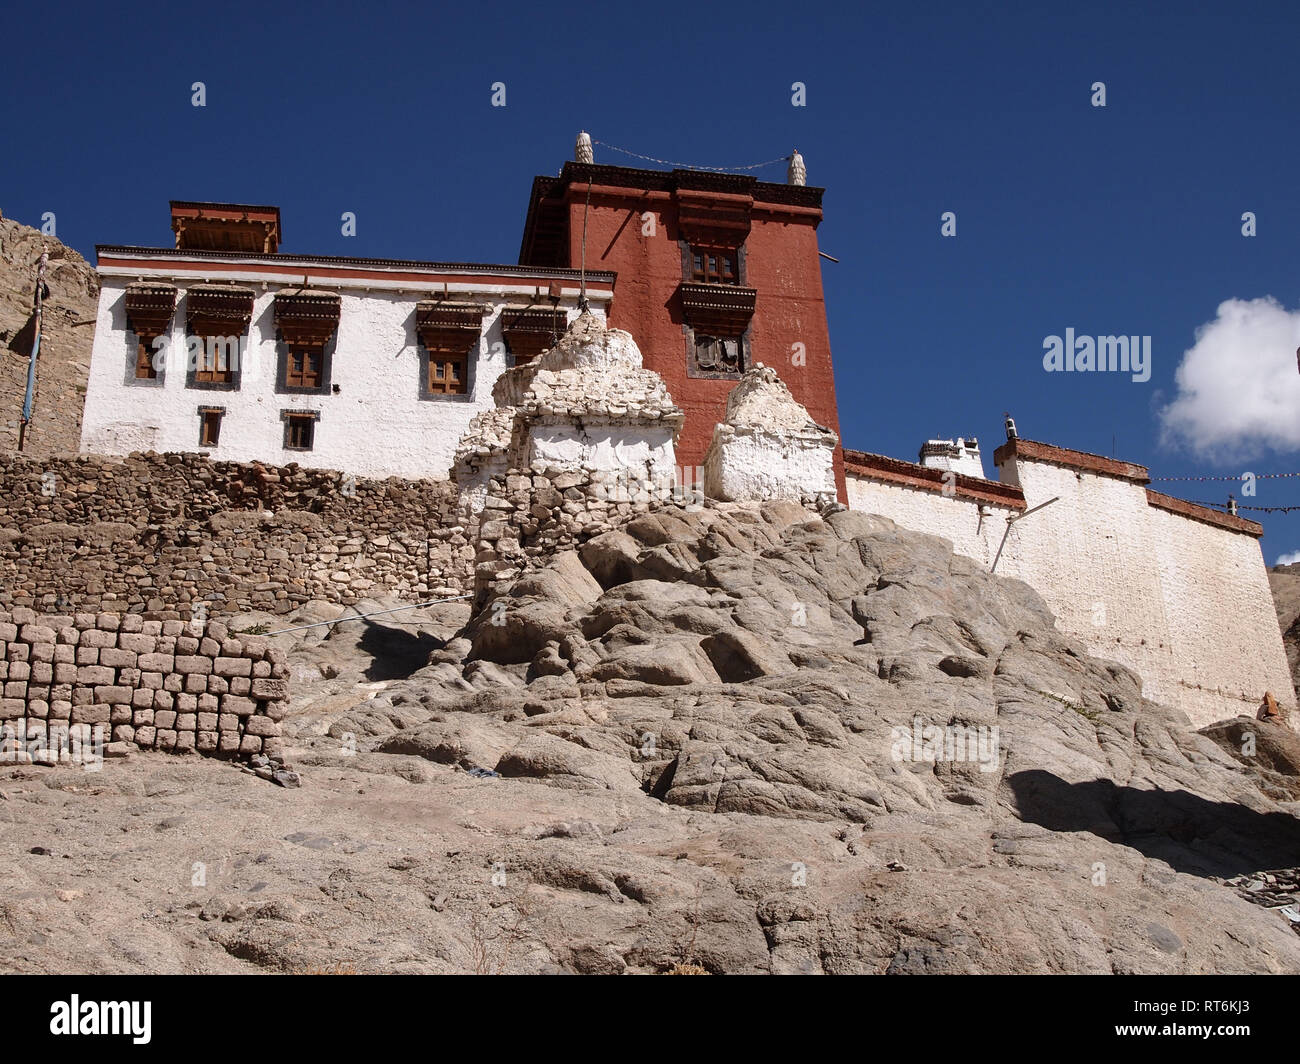 Namgyal Tsemo Gompa, overlooking the city of Leh (Ladakh) Stock Photo